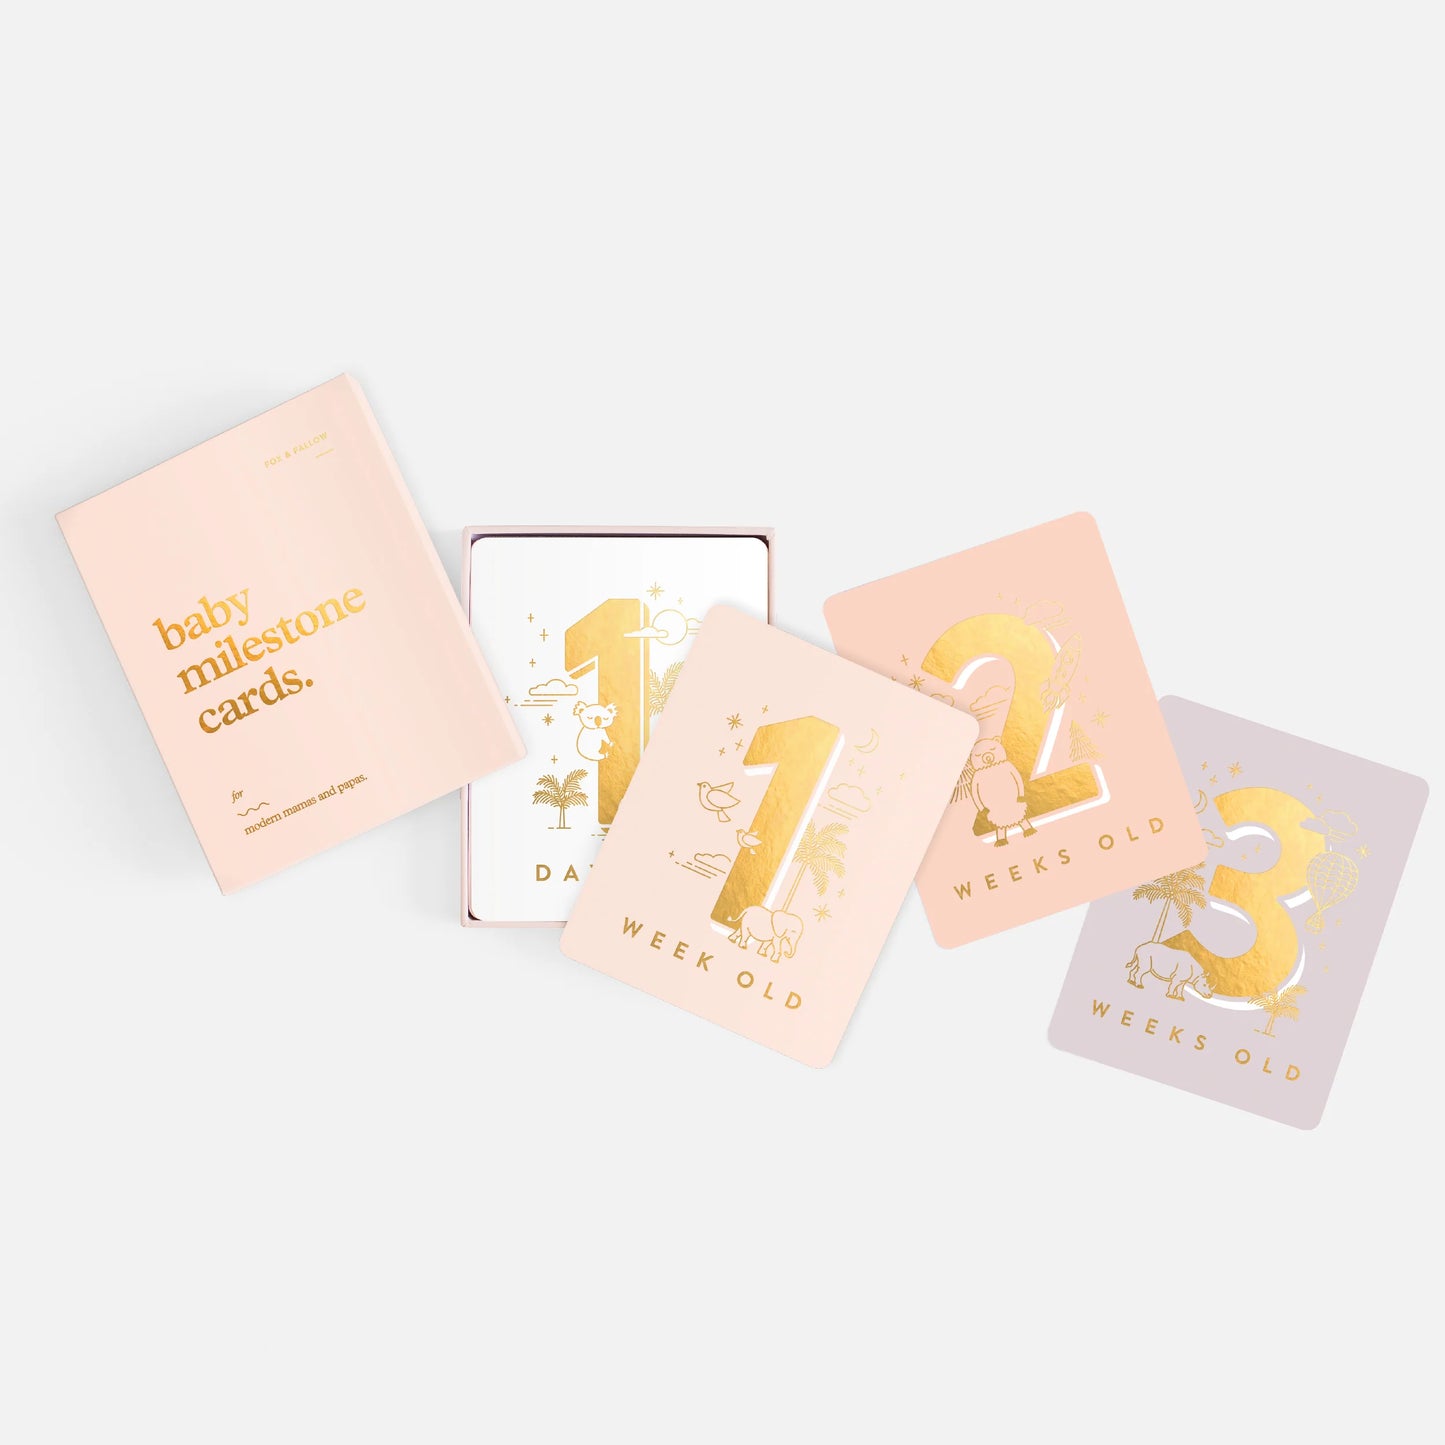 Fox & Follow Baby Milestone Cards Pink